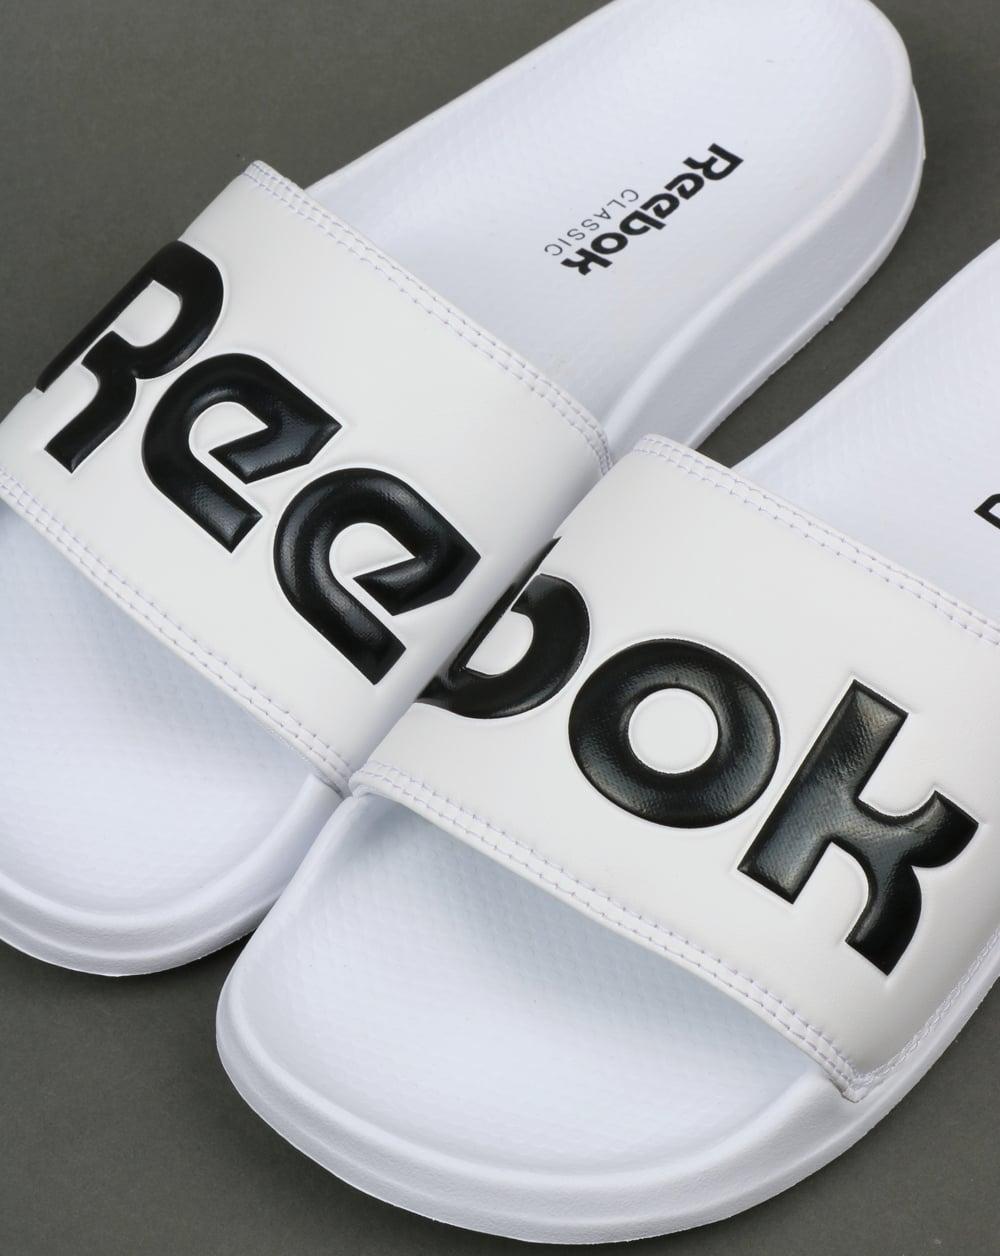 Reebok Classic Logo - Reebok Classic Logo Sliders White, sliders, sandals, pool, flip flops